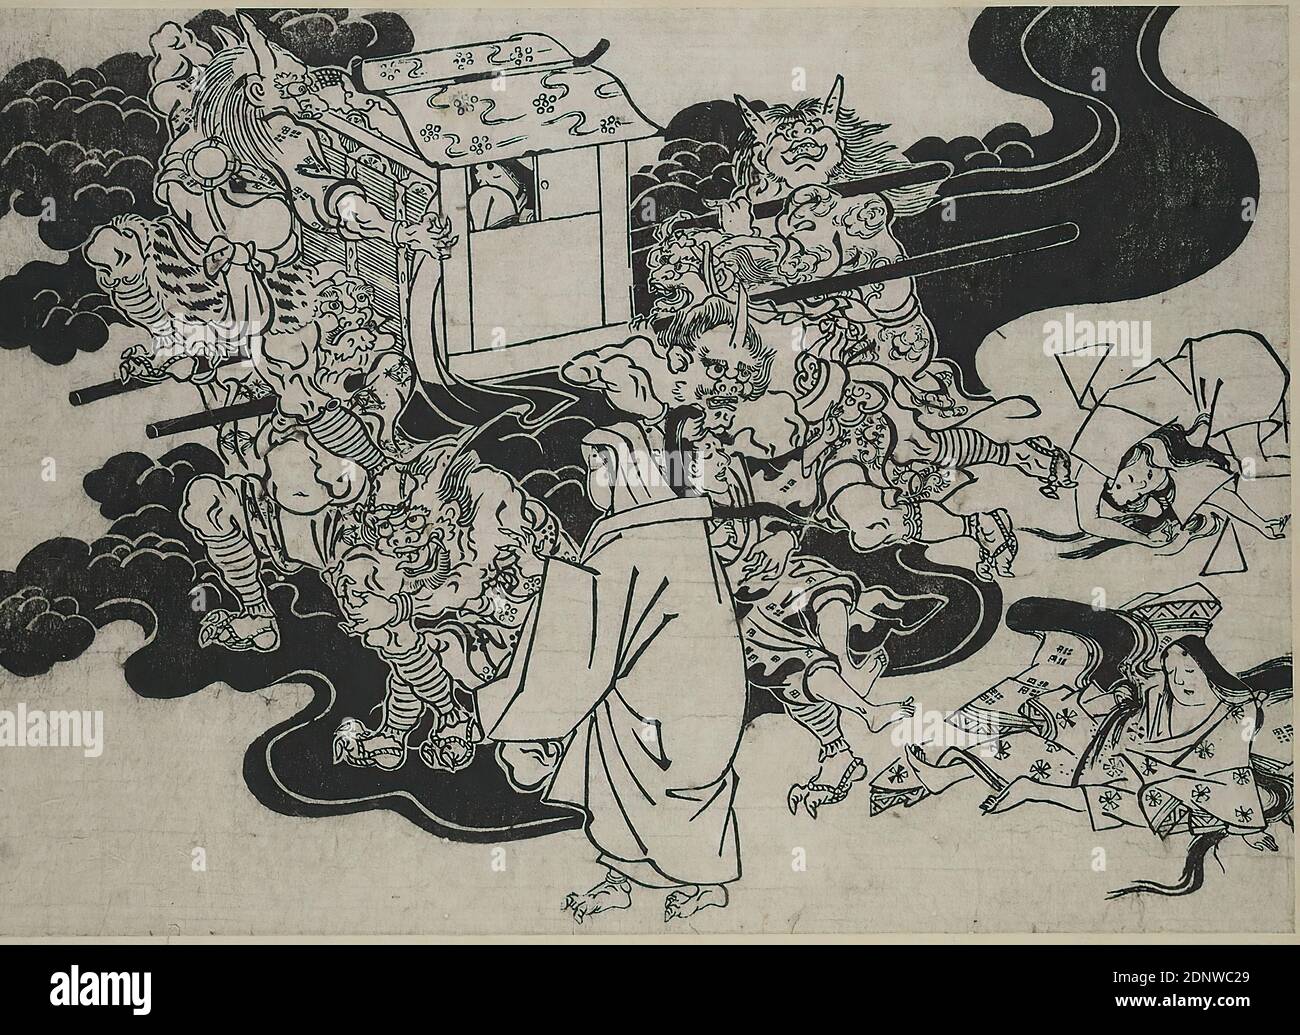 Hishikawa Moronobu, Shutendōji, plate 6, woodcut, total: height: 27,00 cm; width: 35,00 cm, unsigned, prints, printed matter, mythical creatures, monsters, legendary figures, Edo period Stock Photo